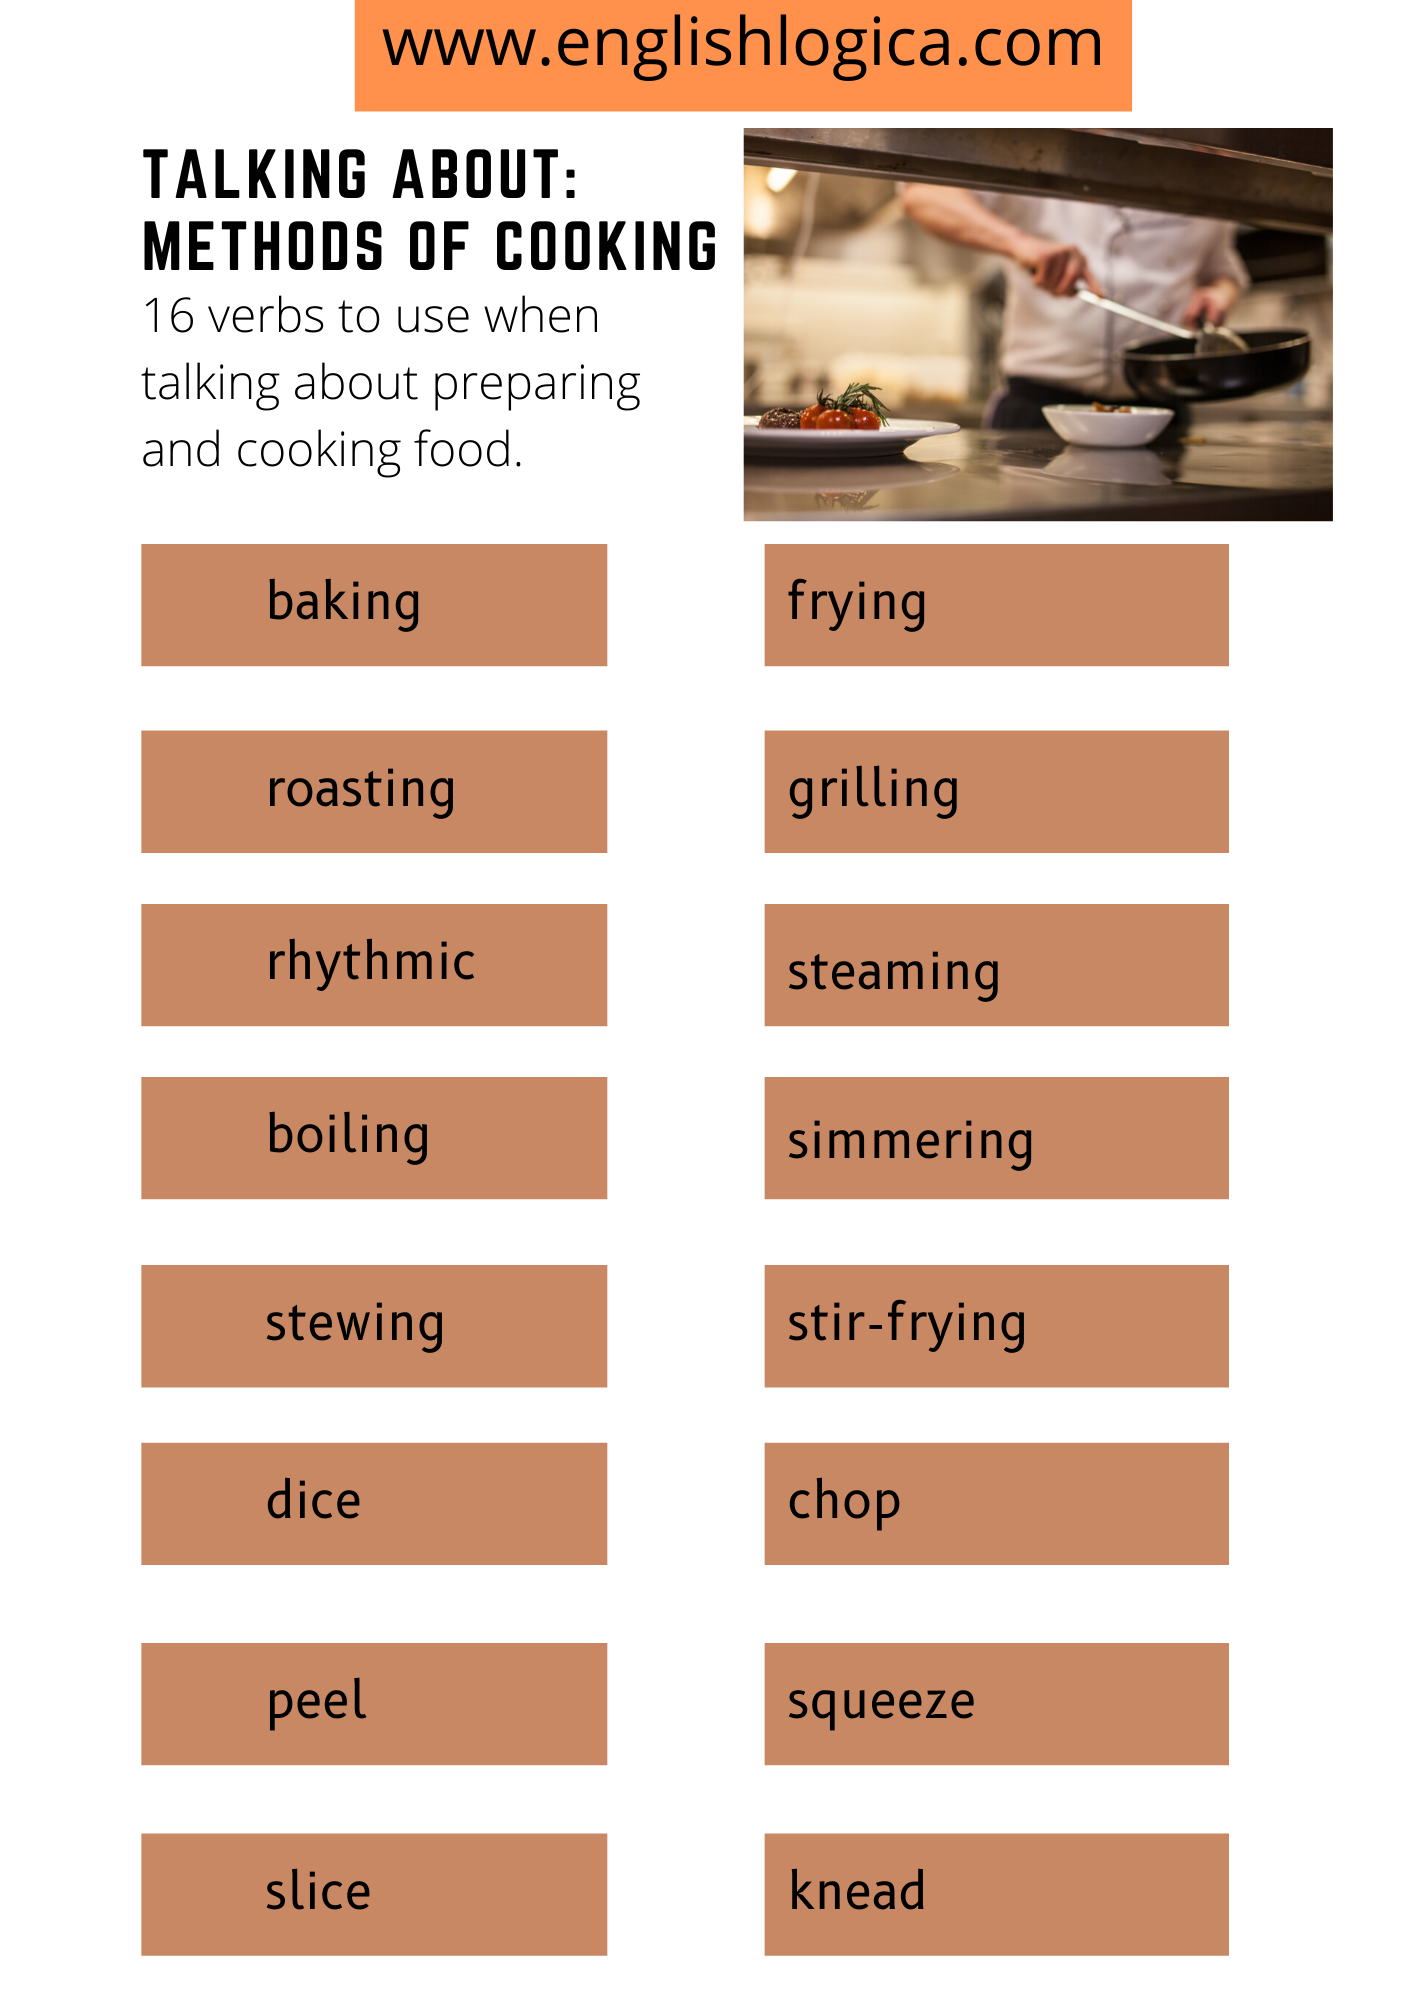 Methods of cooking and preparing food.png